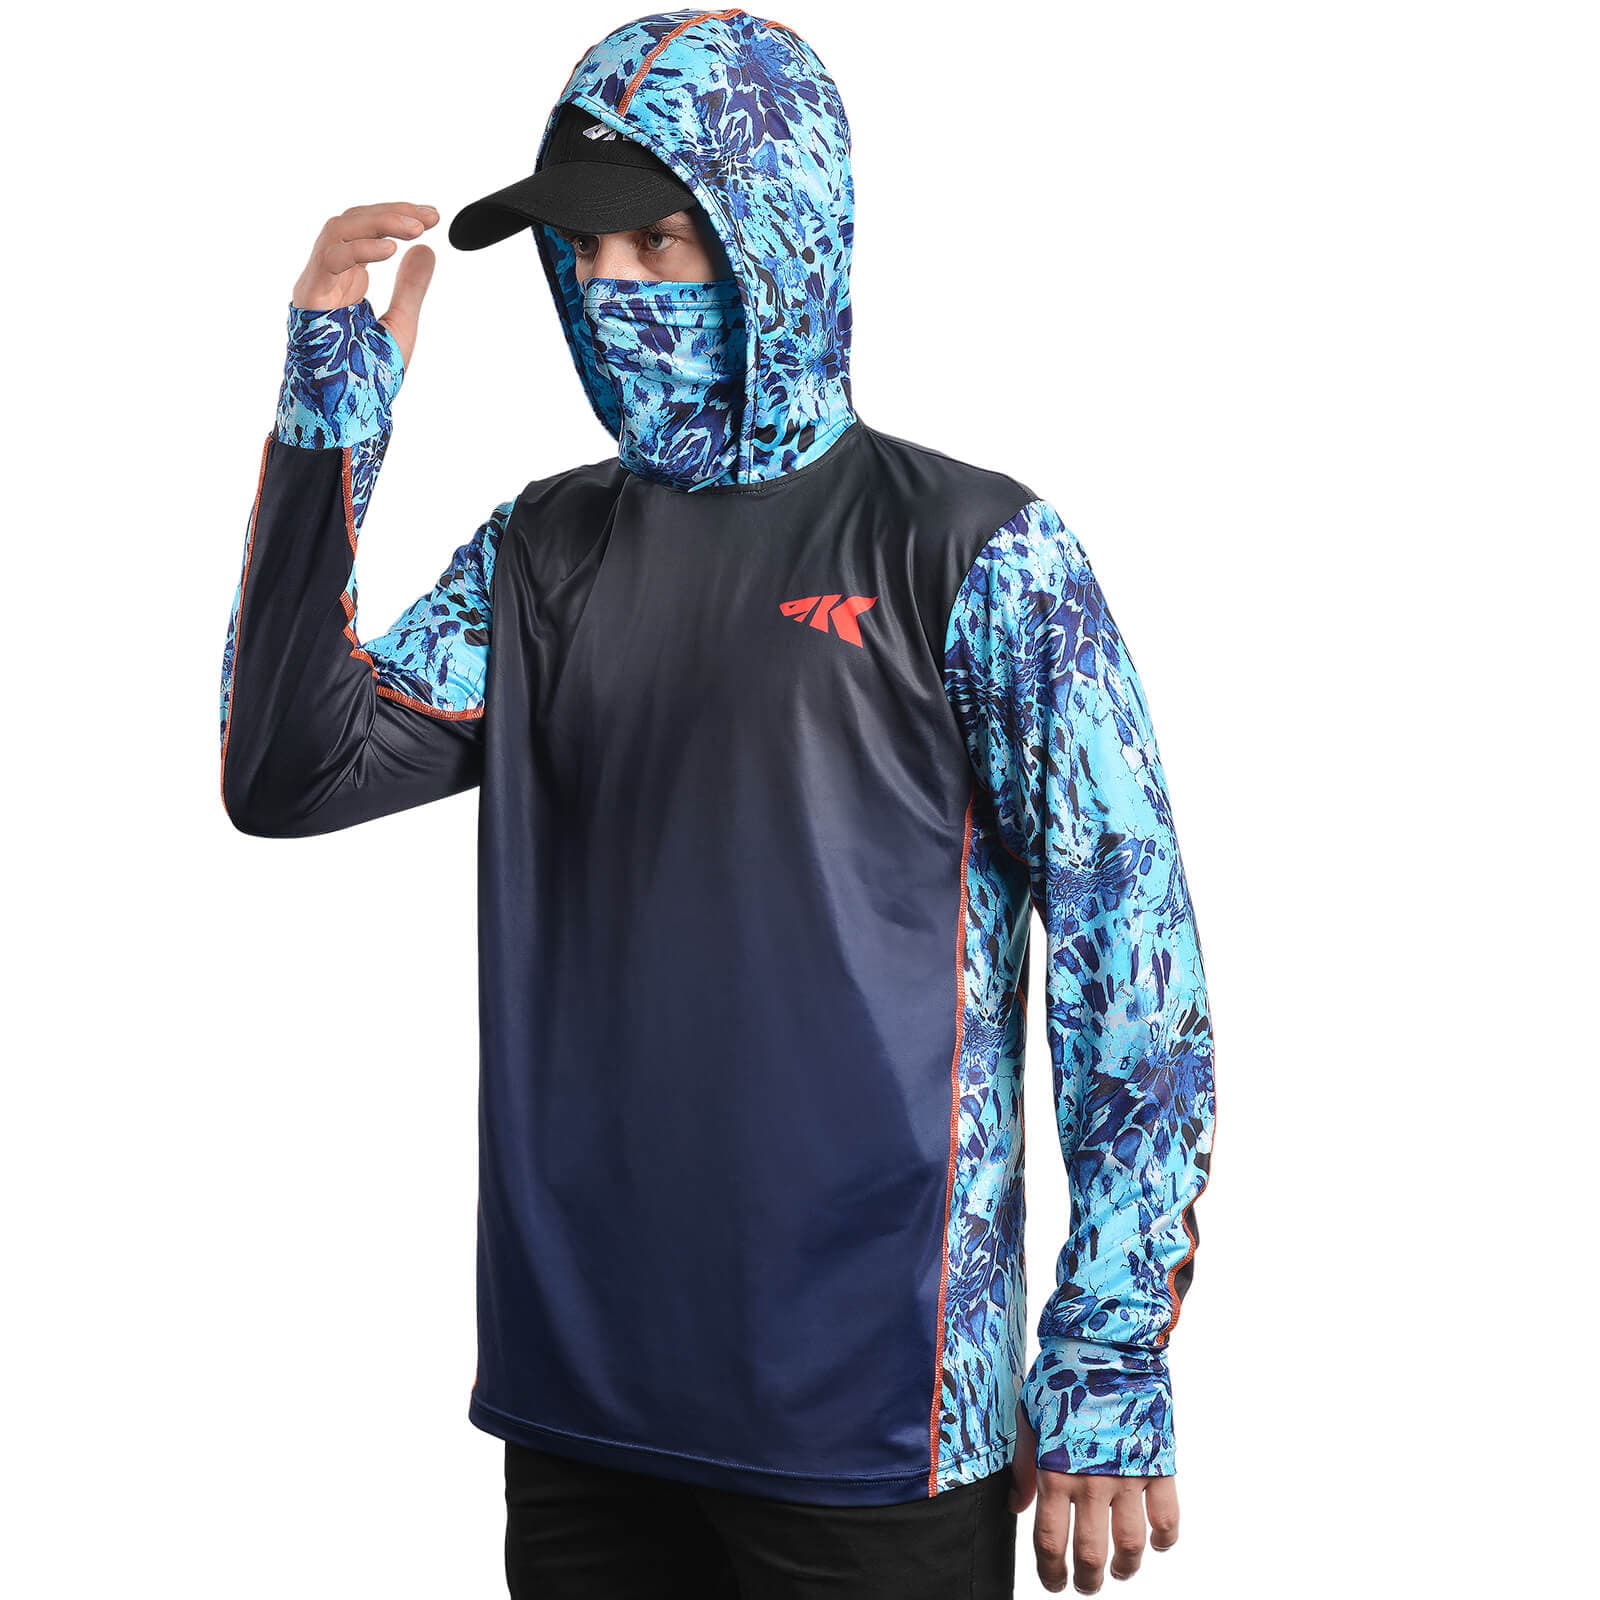 KastKing Men's Hoodie Shirt UPF 50 Sun Protection Long Sleeve